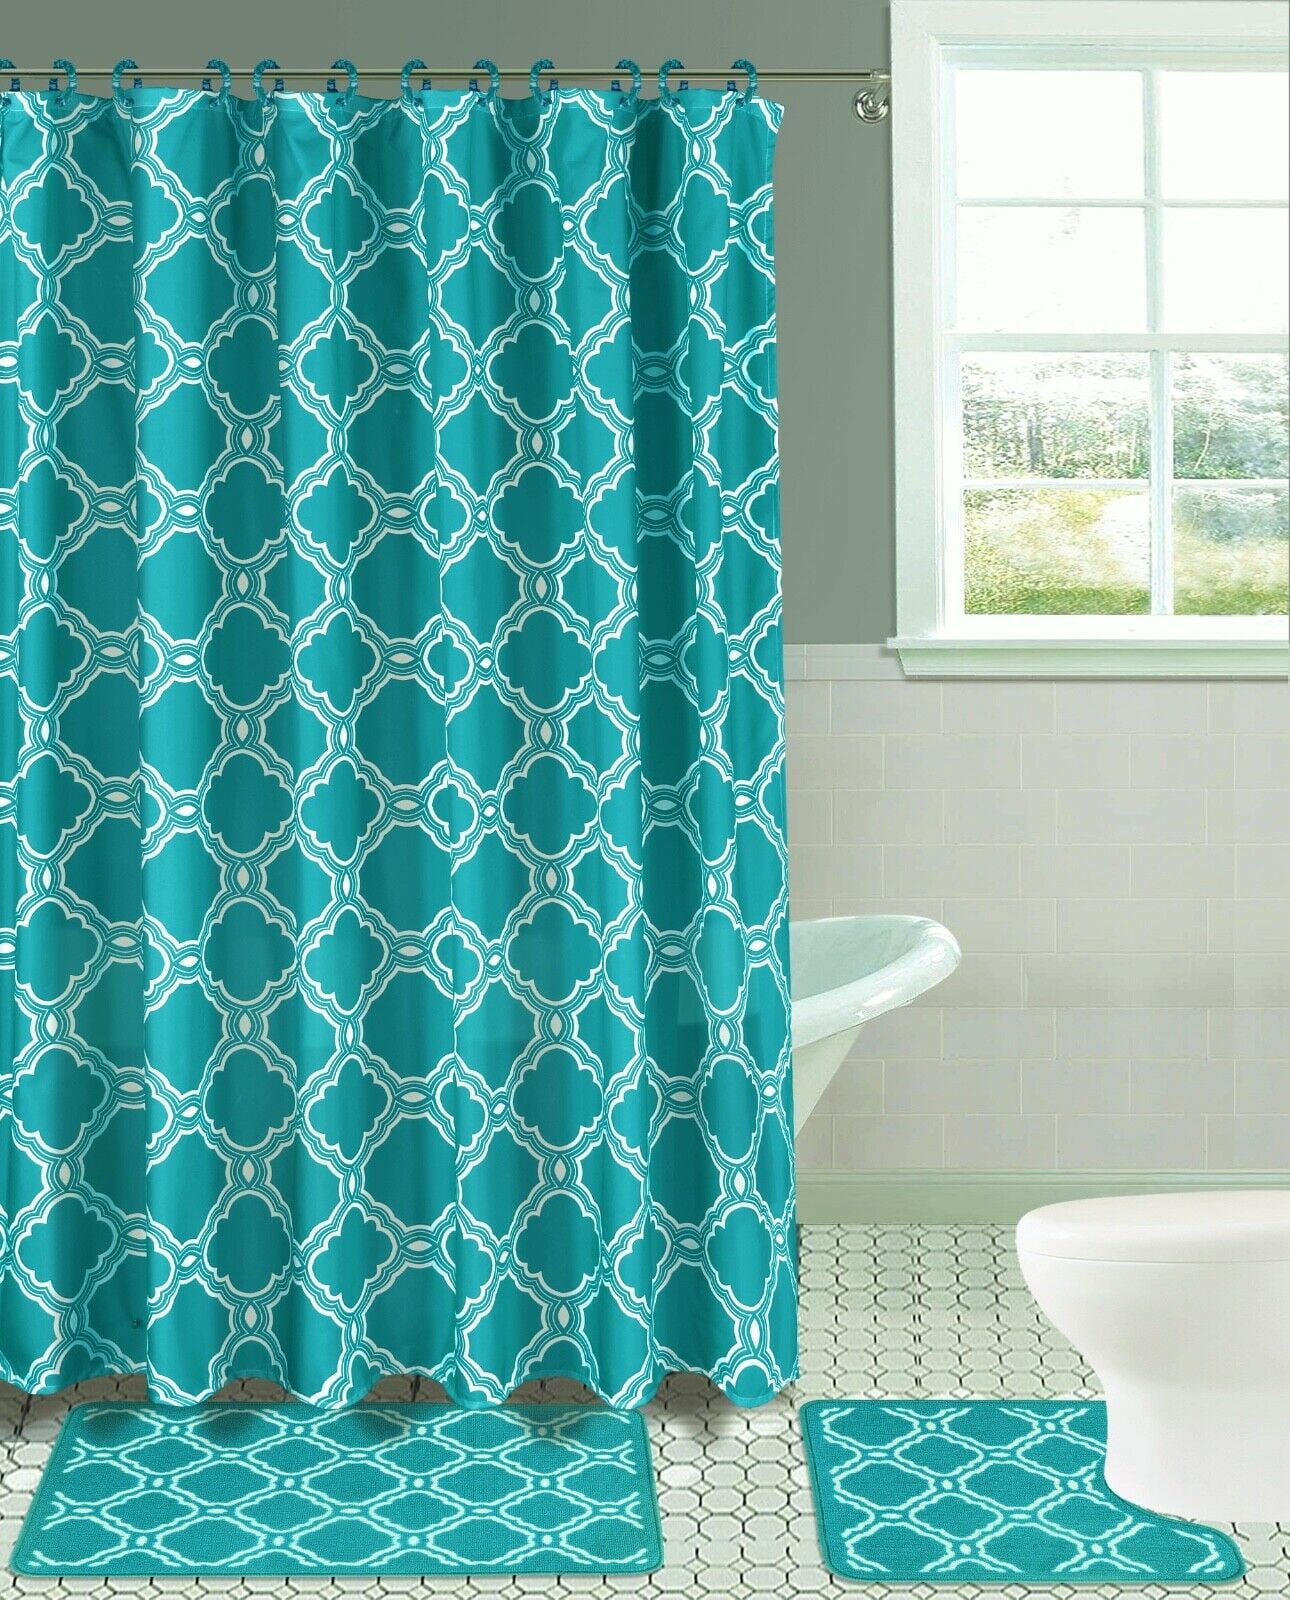 Shower Hooks Fabric Shower Curtain Turquoise Bath Set:2 Memory Foam Floor Mats 